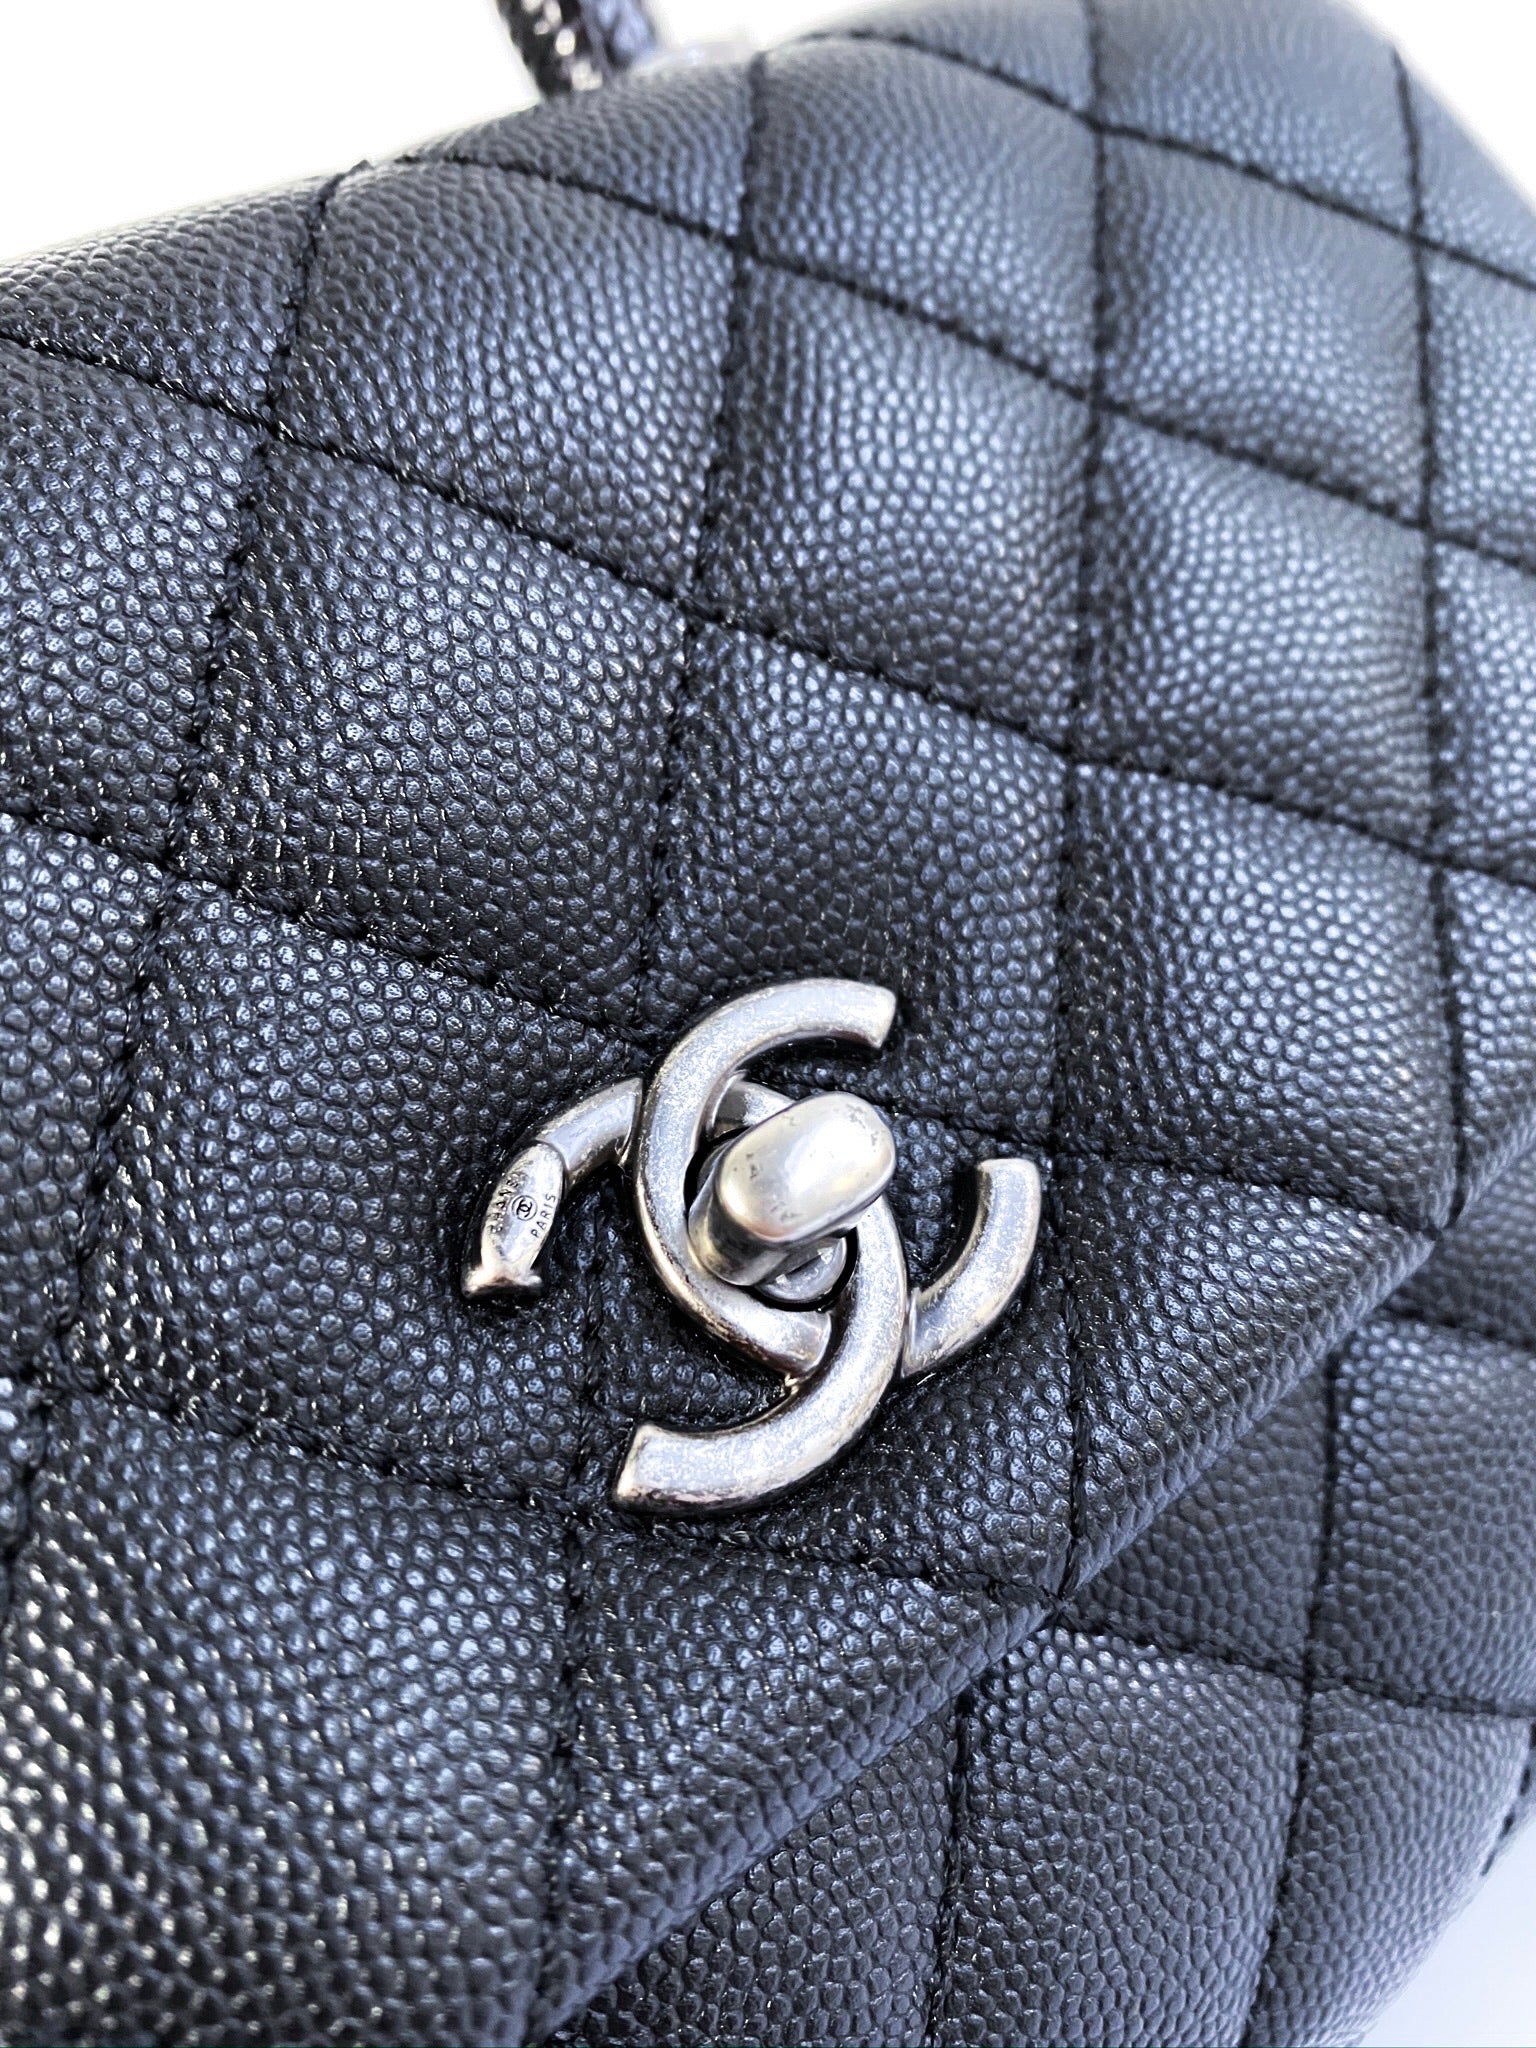 Chanel Coco Handle Bag - 61 For Sale on 1stDibs